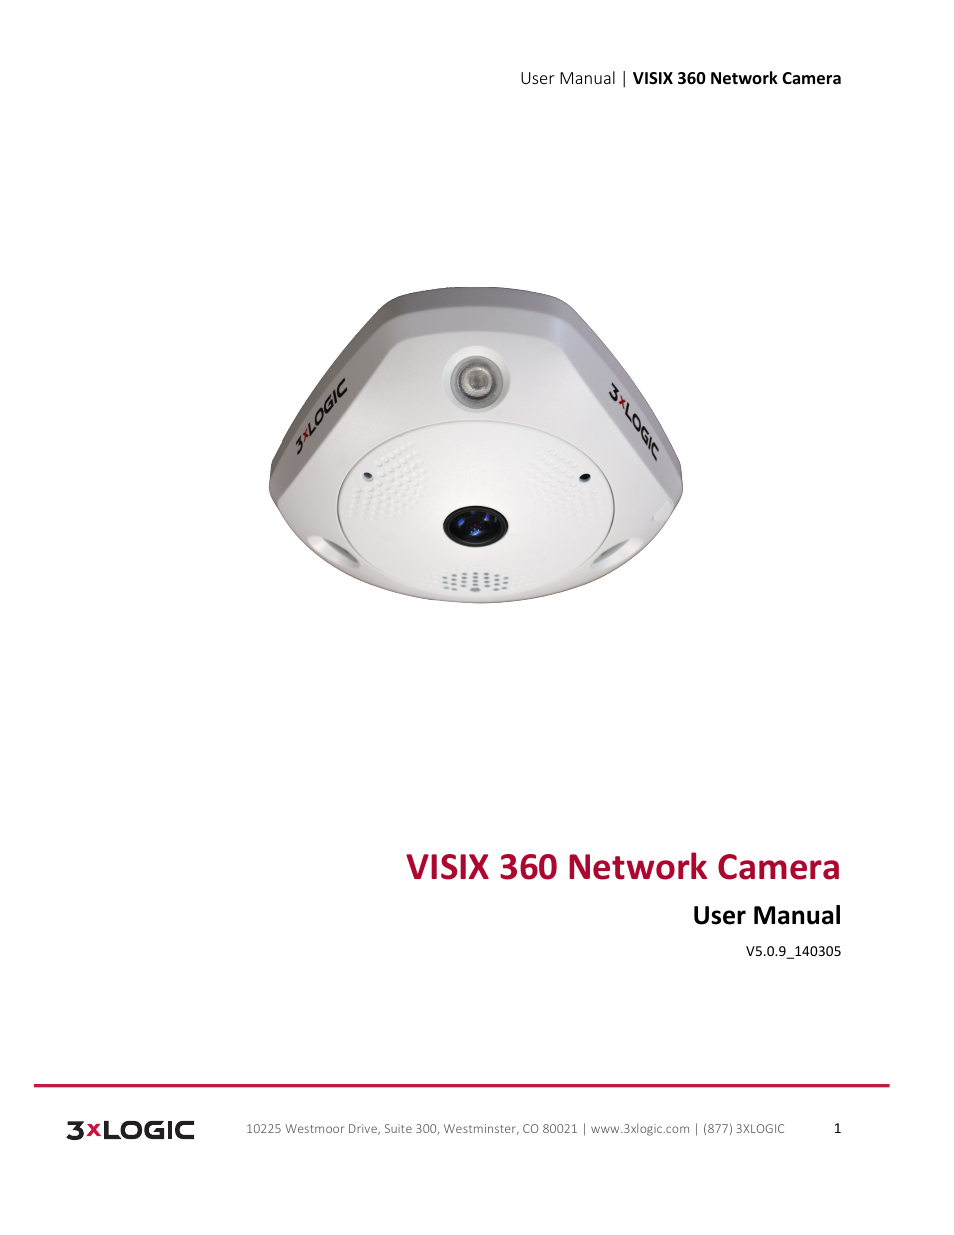 3xLOGIC VISIX Camera User Manual | 75 pages